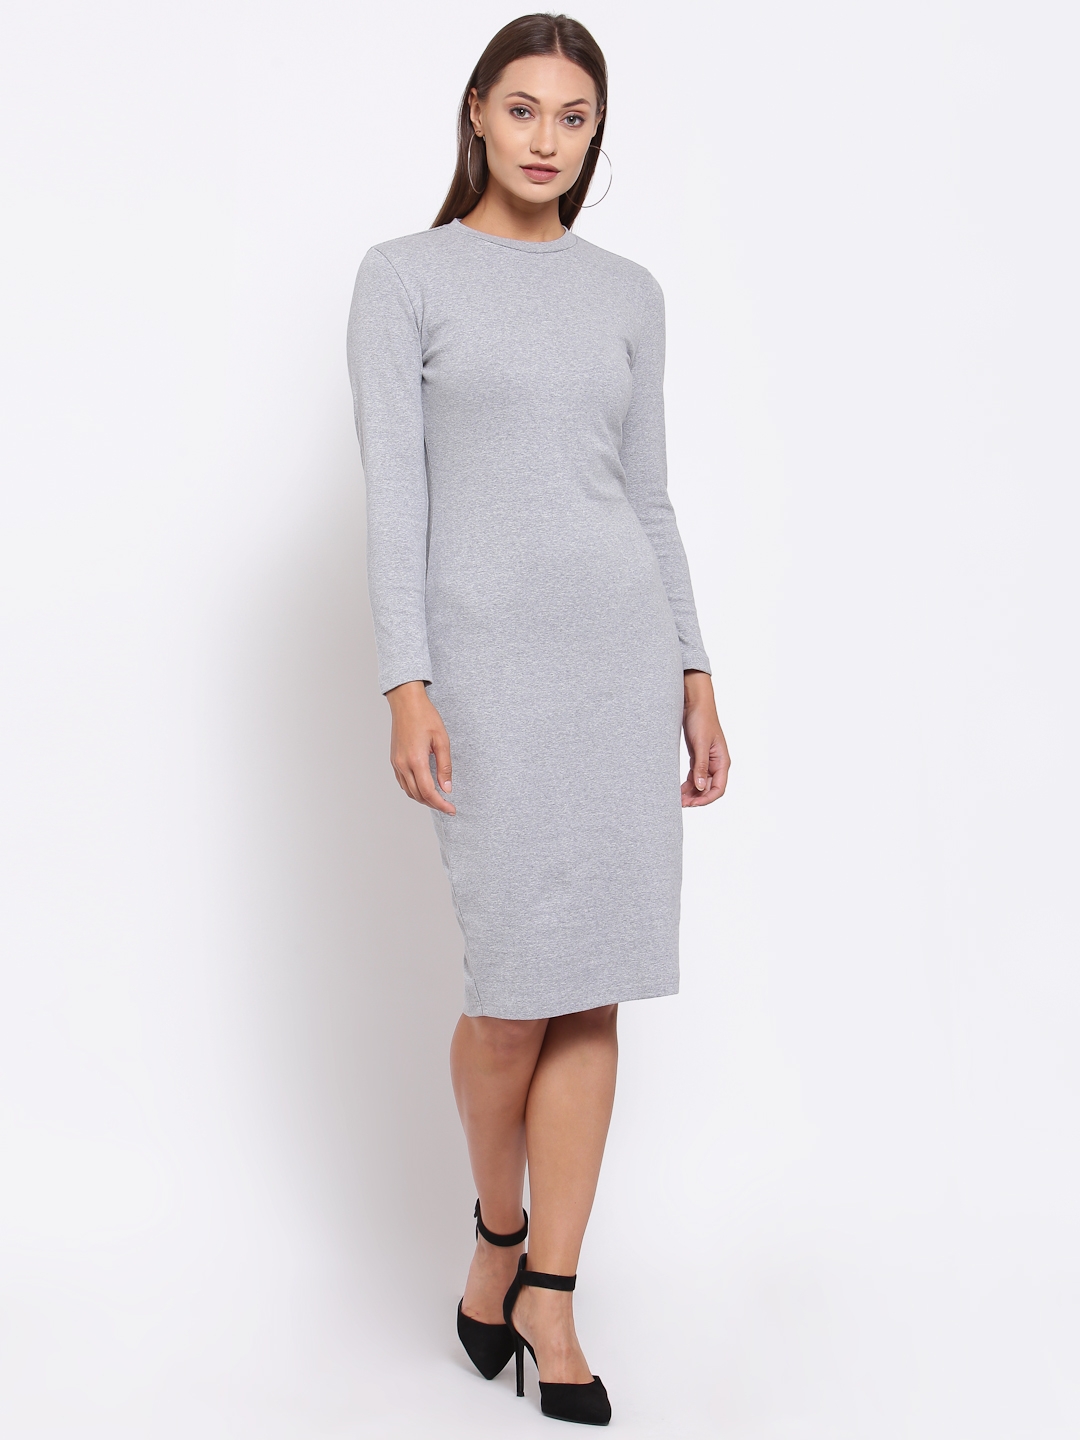 YOONOY | Grey Solid Bodycon Dress